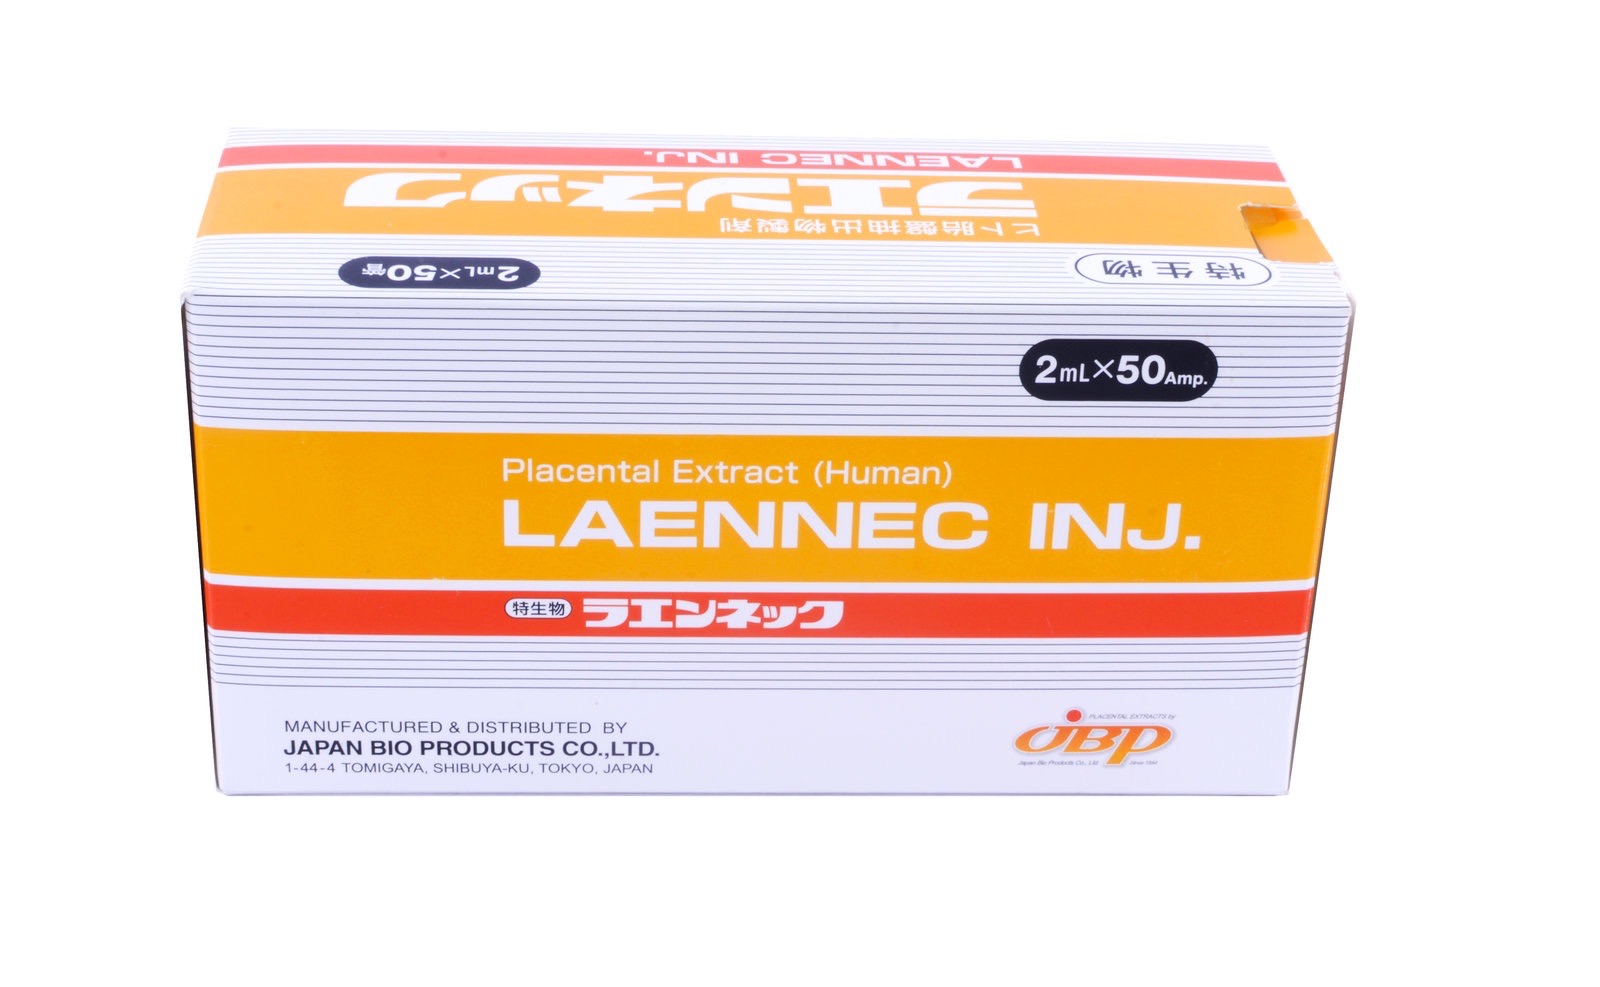 Плацентарные препараты Laennec и Melsmon, Япония